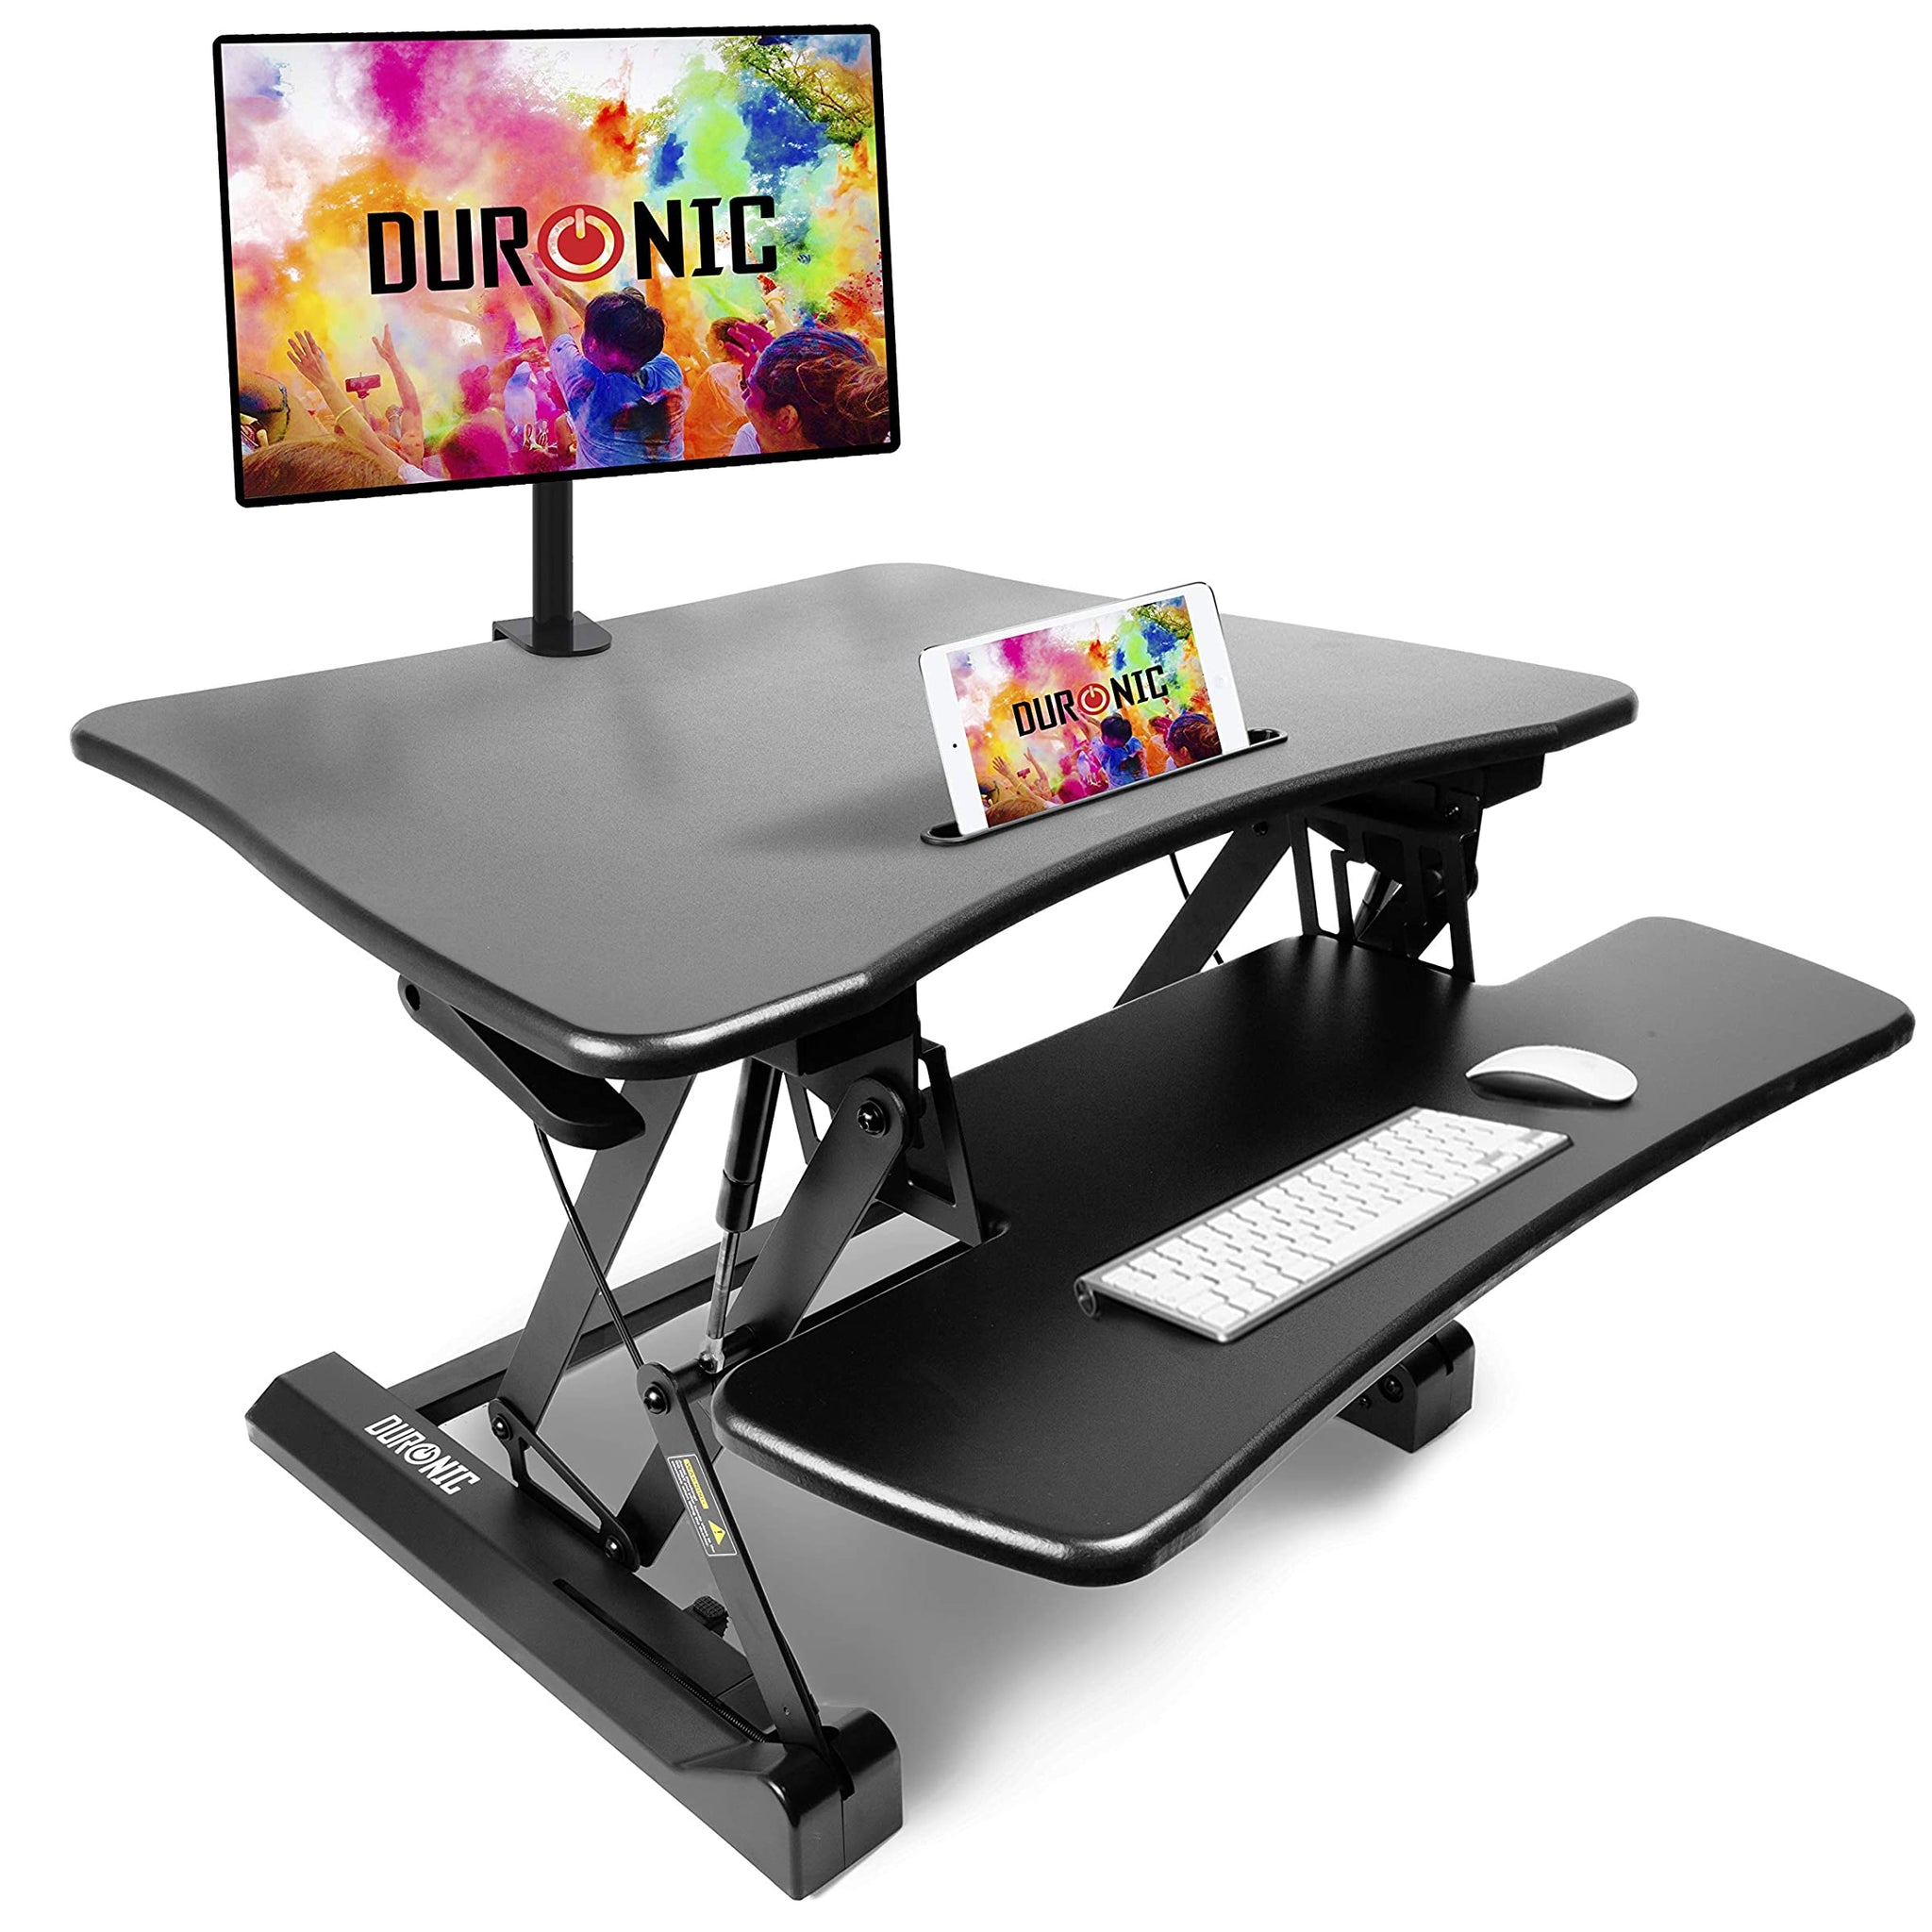 Soporte para monitor - DM05D3 BK DURONIC, Escritorio Standing Desk para Monitor con Altura Ajustable de 14.5 a 50 cm